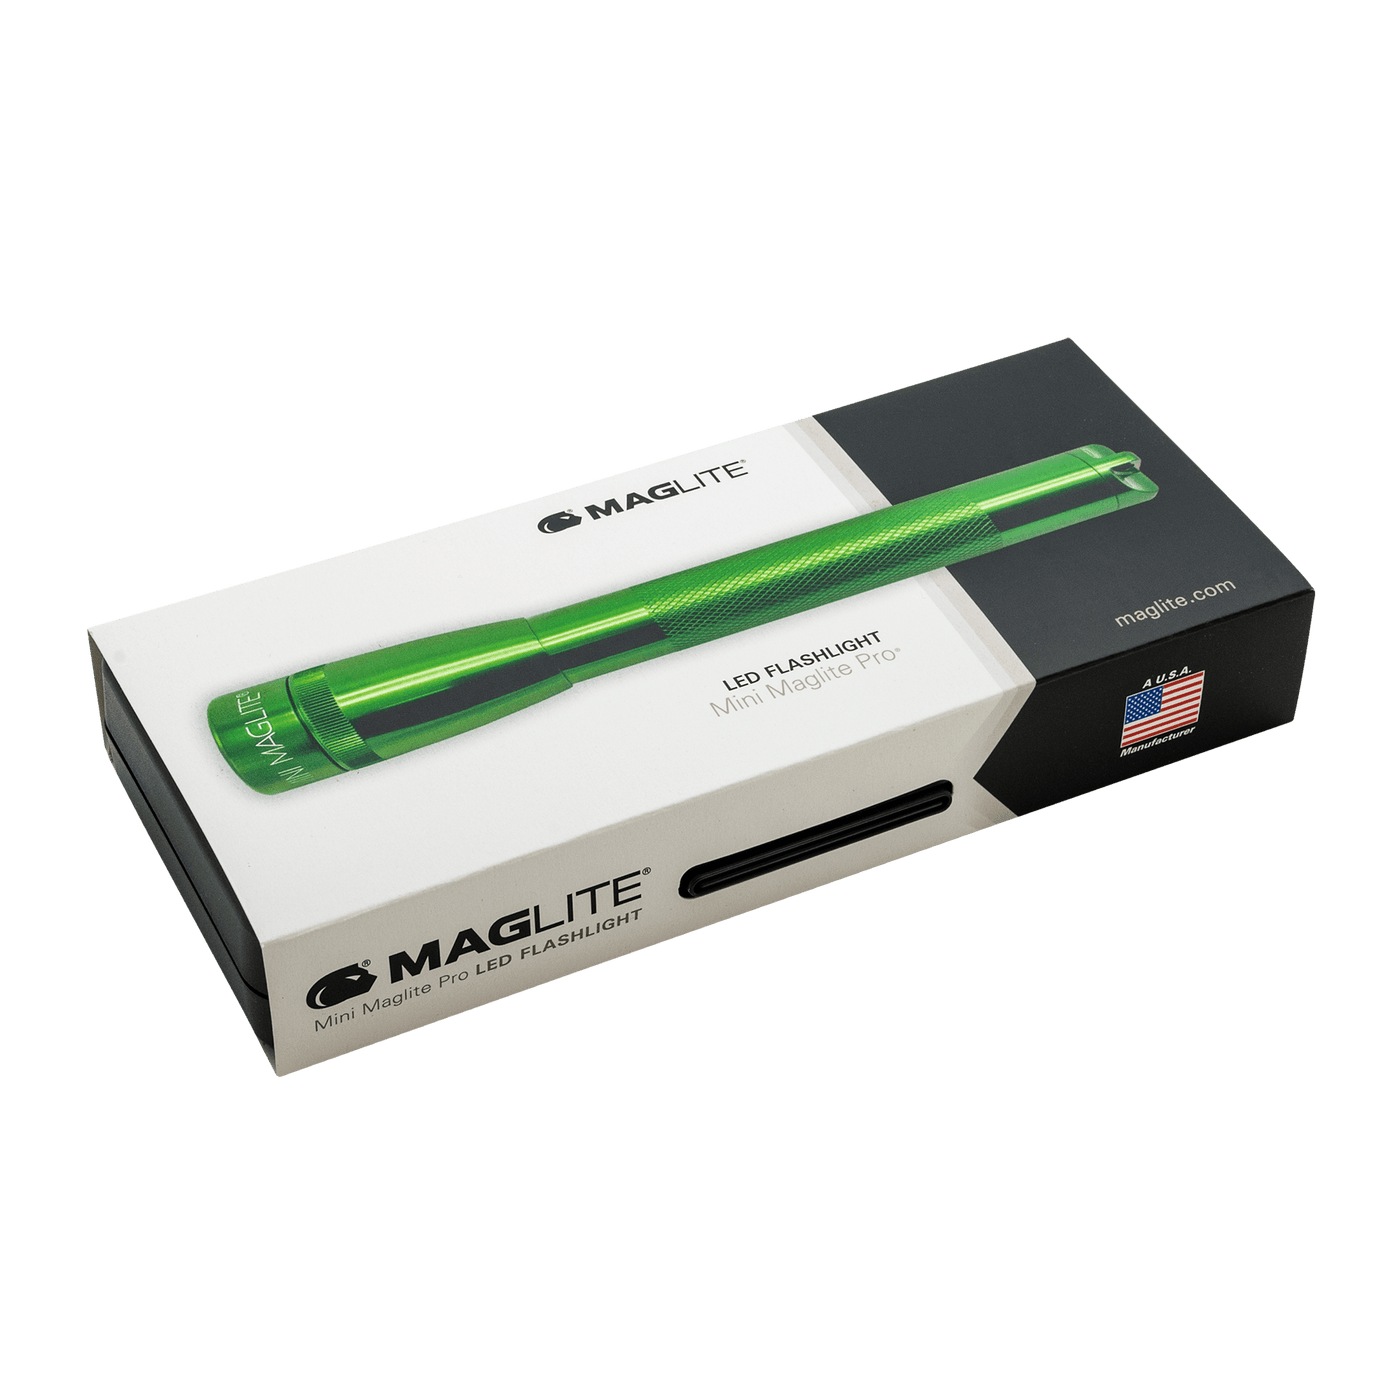 Mini Maglite Pro LED - You're The One - Pocket / Purse Flashlight - Green